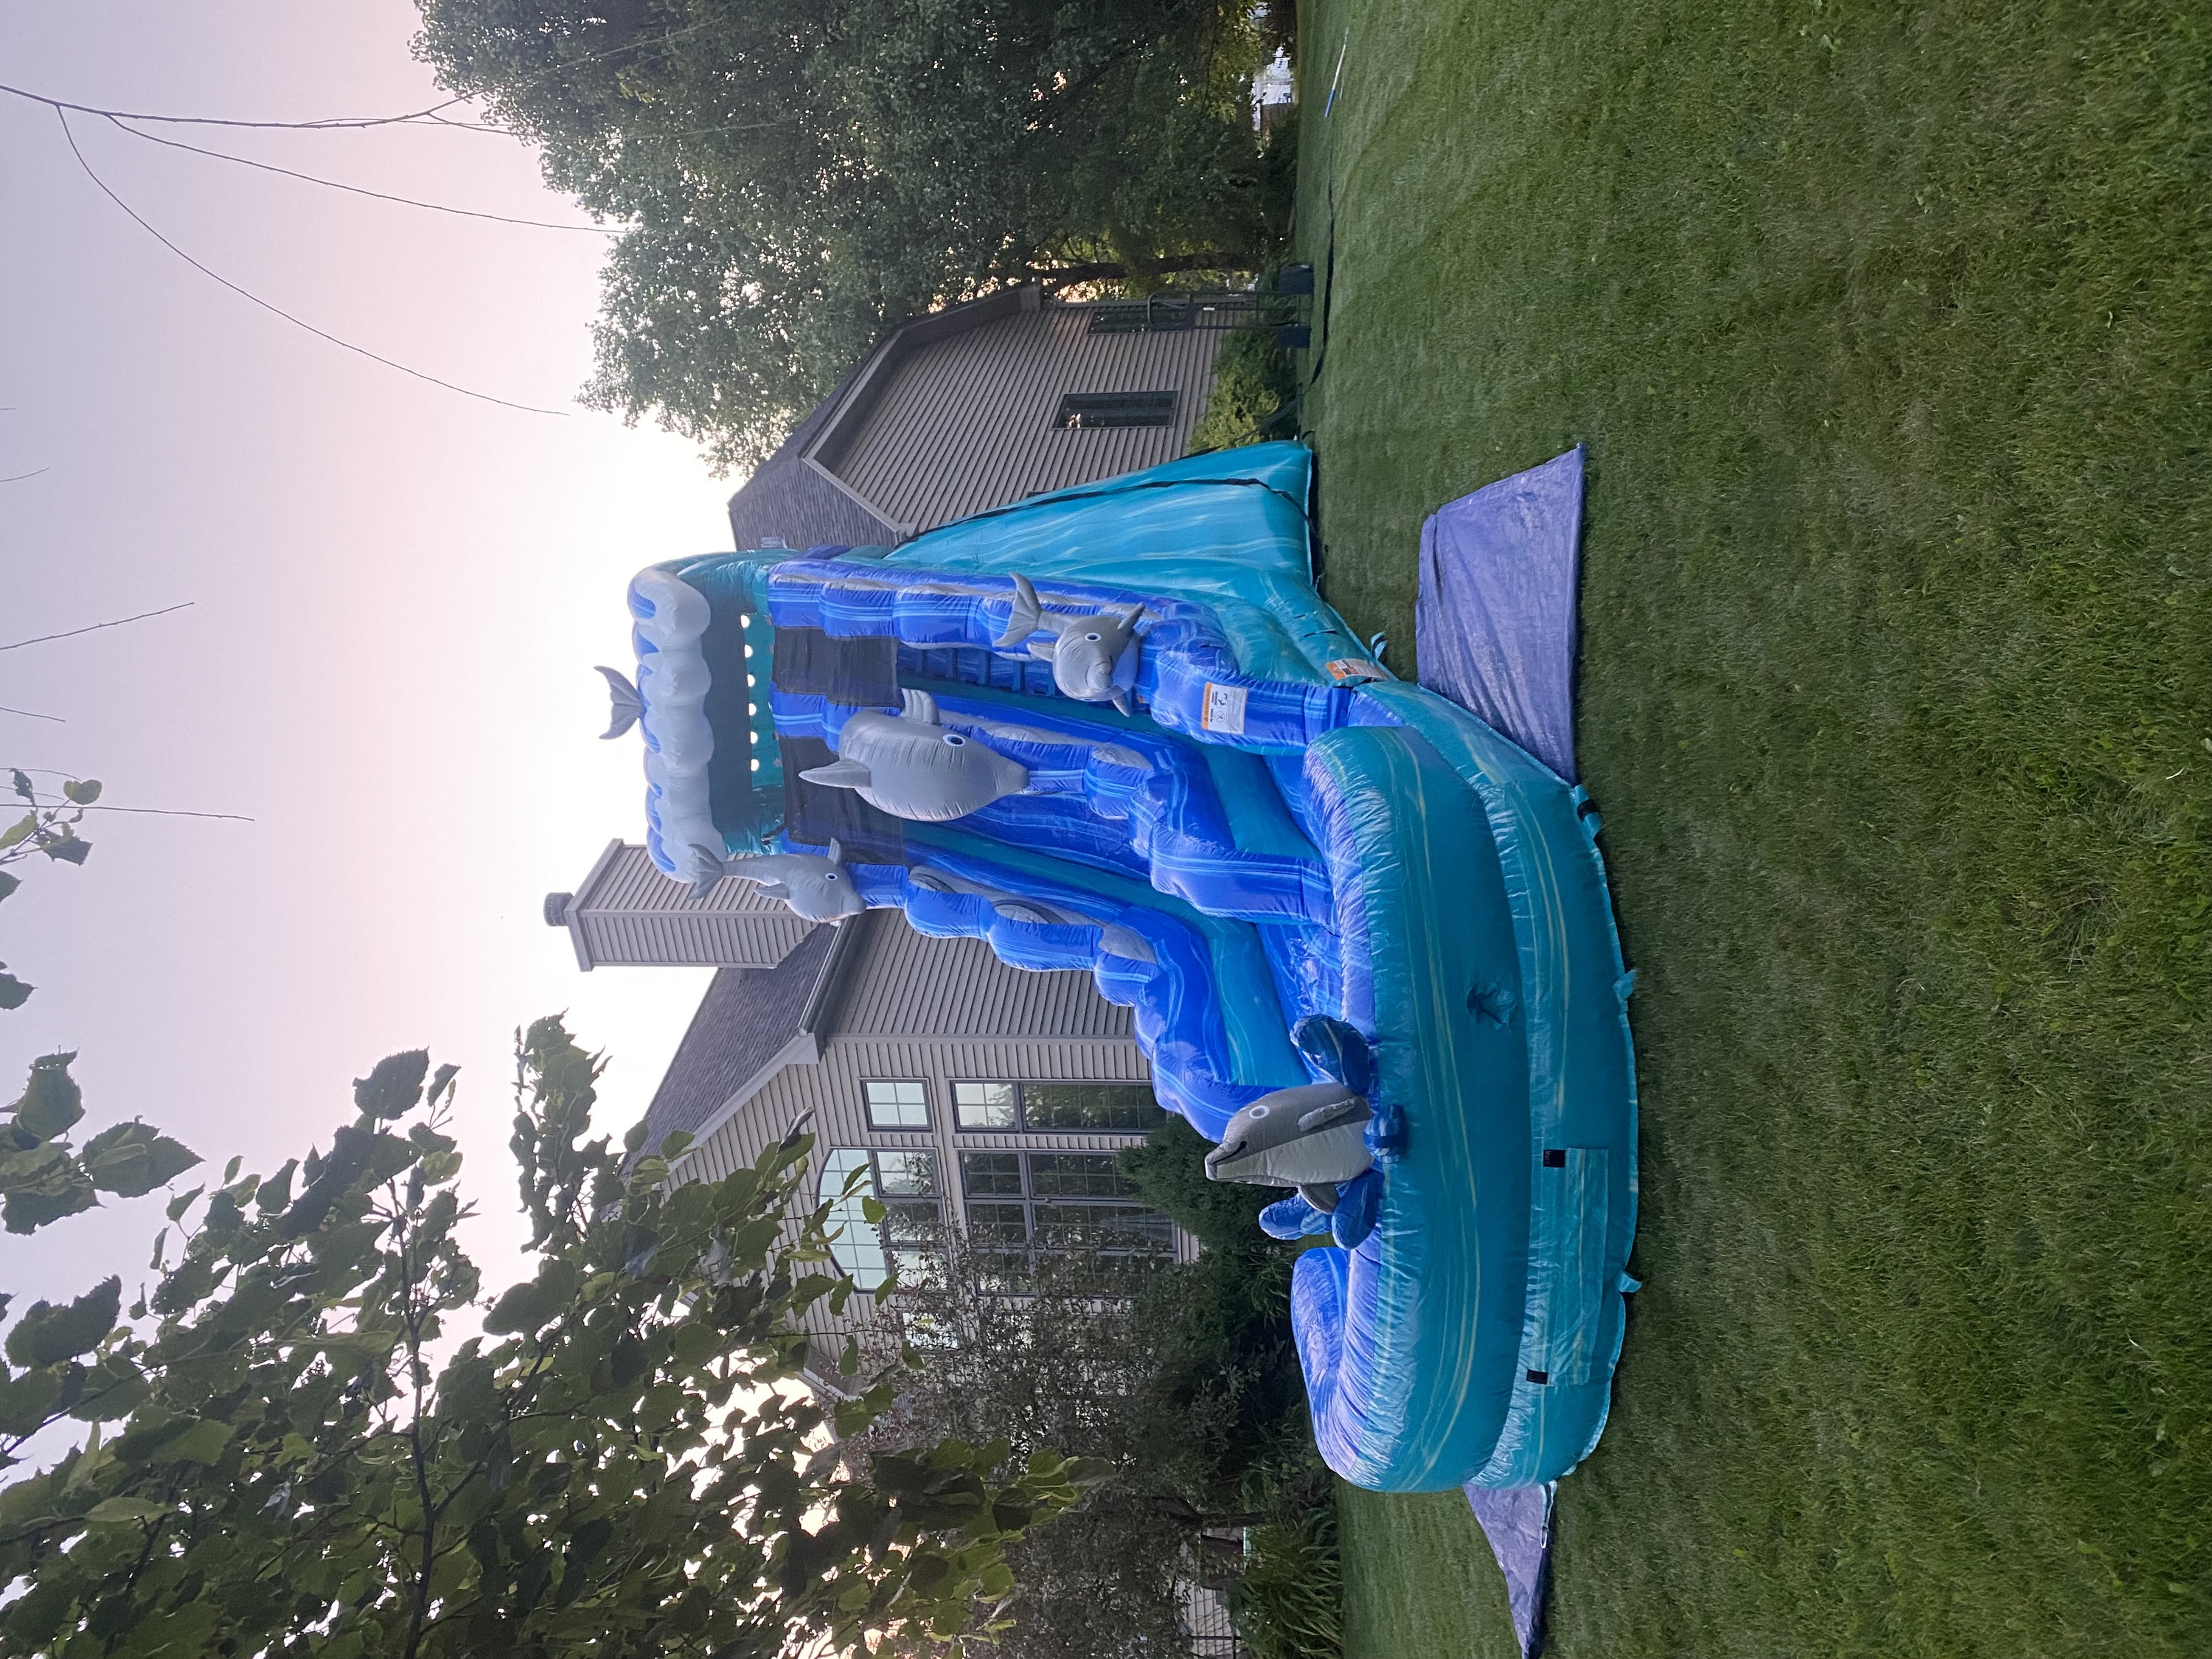 Dolphin water slide rentals, Crest Hill, IL